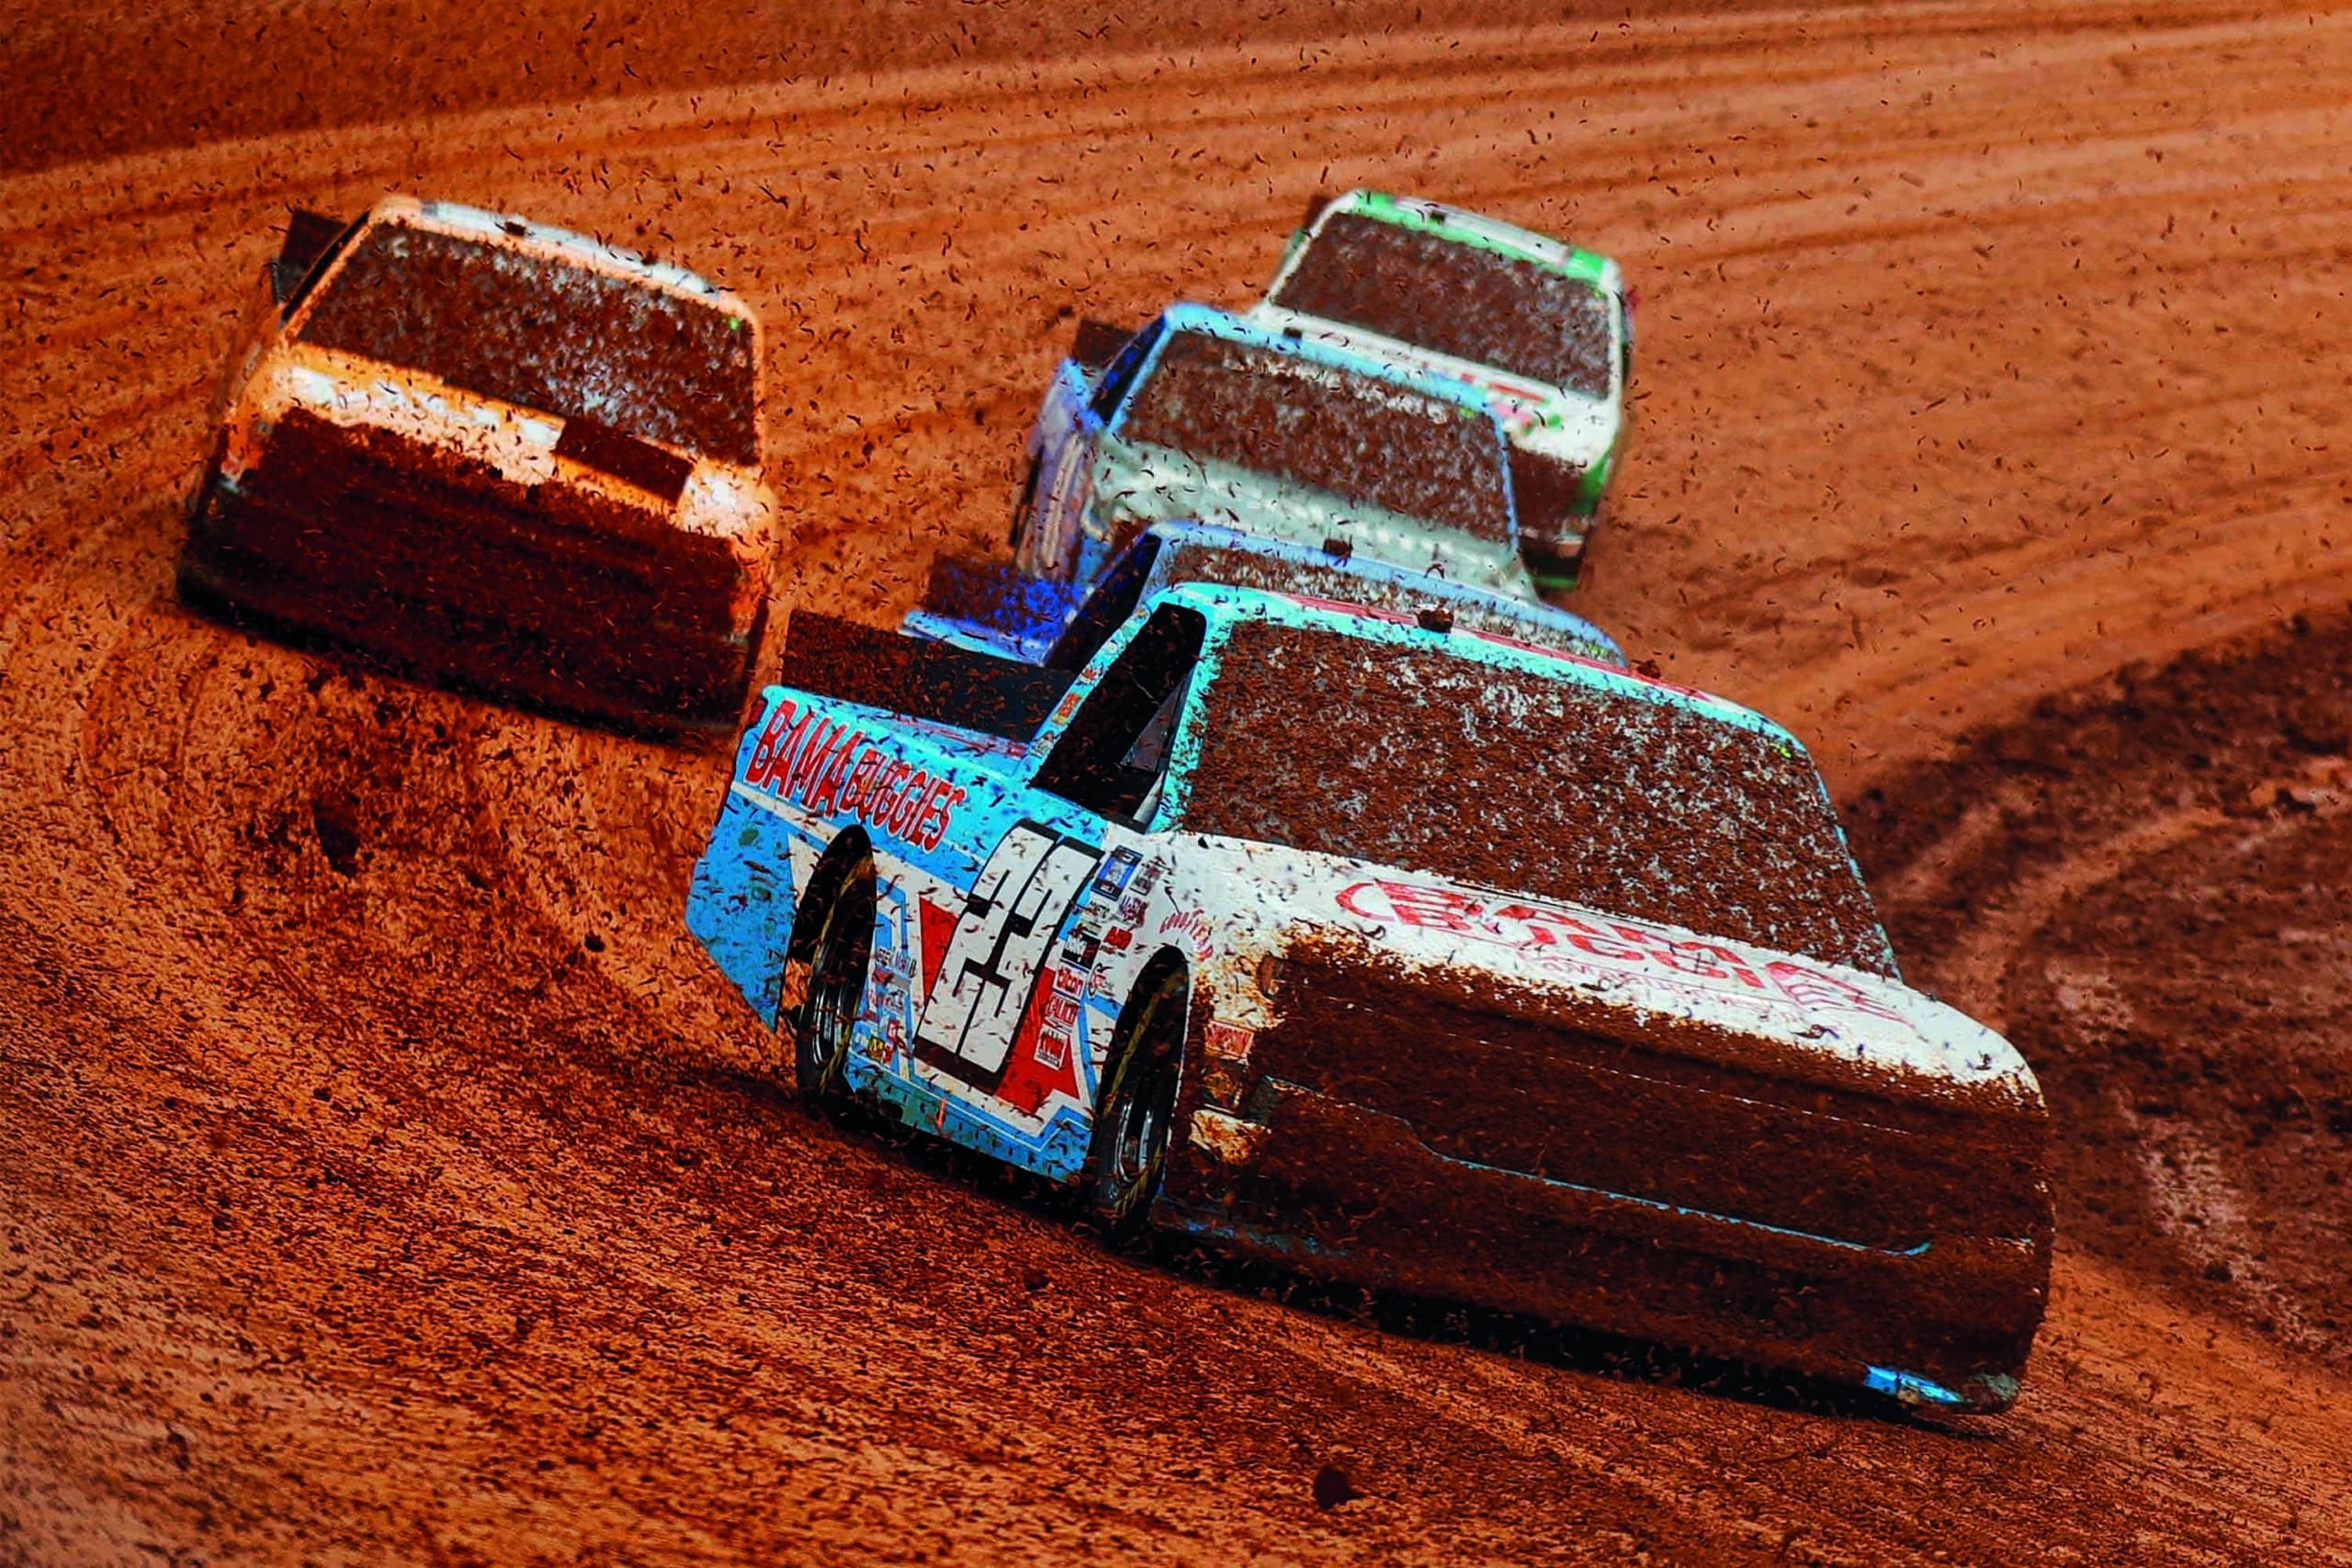 Mud-spattered-windscreens-at-Bristol-dirt-track-NASCAR-truck-race